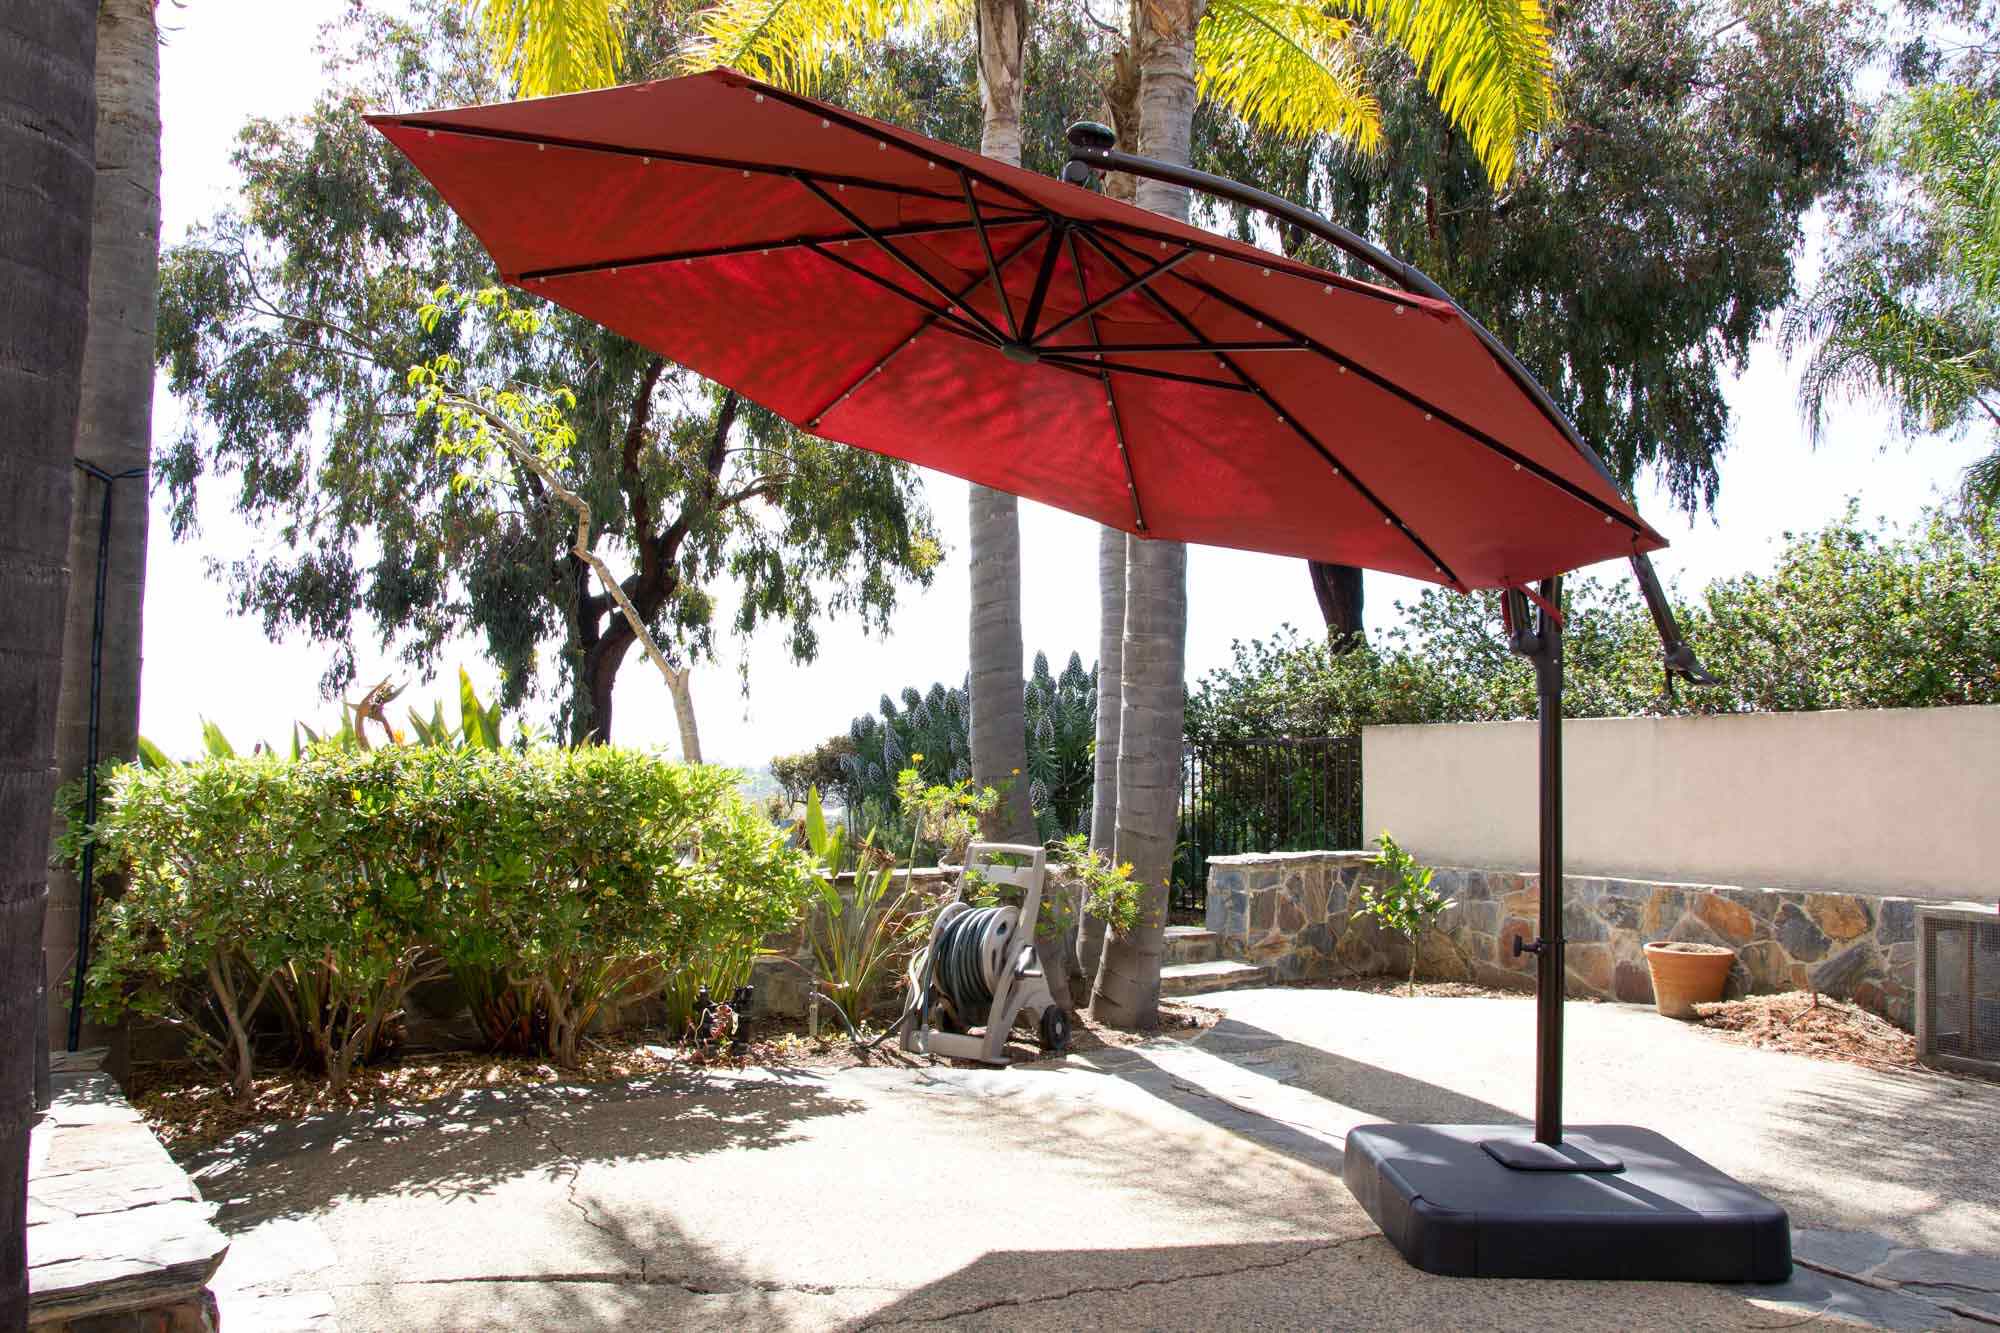 How To Stabilize Outdoor Umbrella